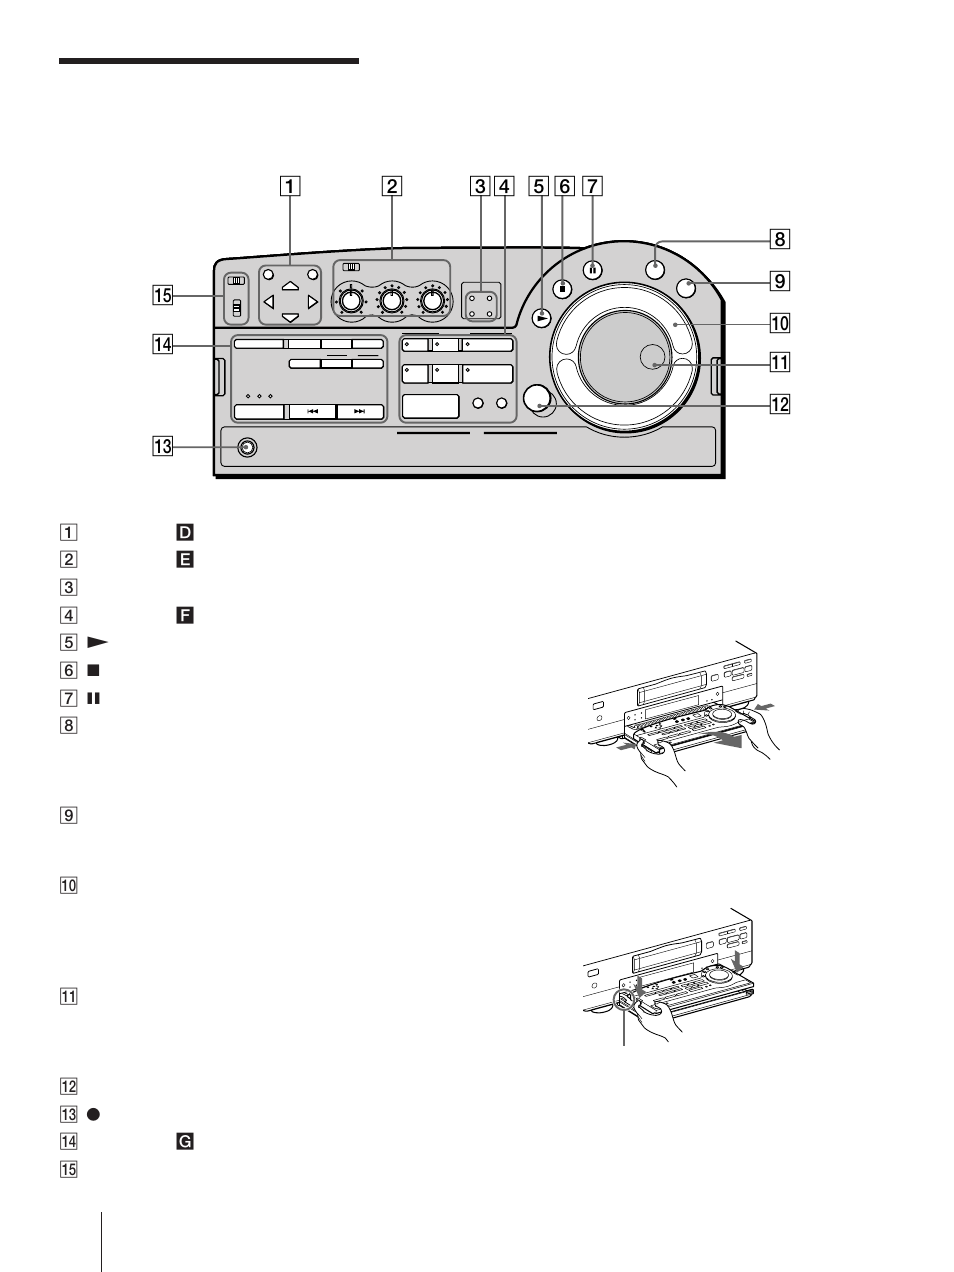 Sony DSR-30P Manuel d'utilisation | Page 10 / 124